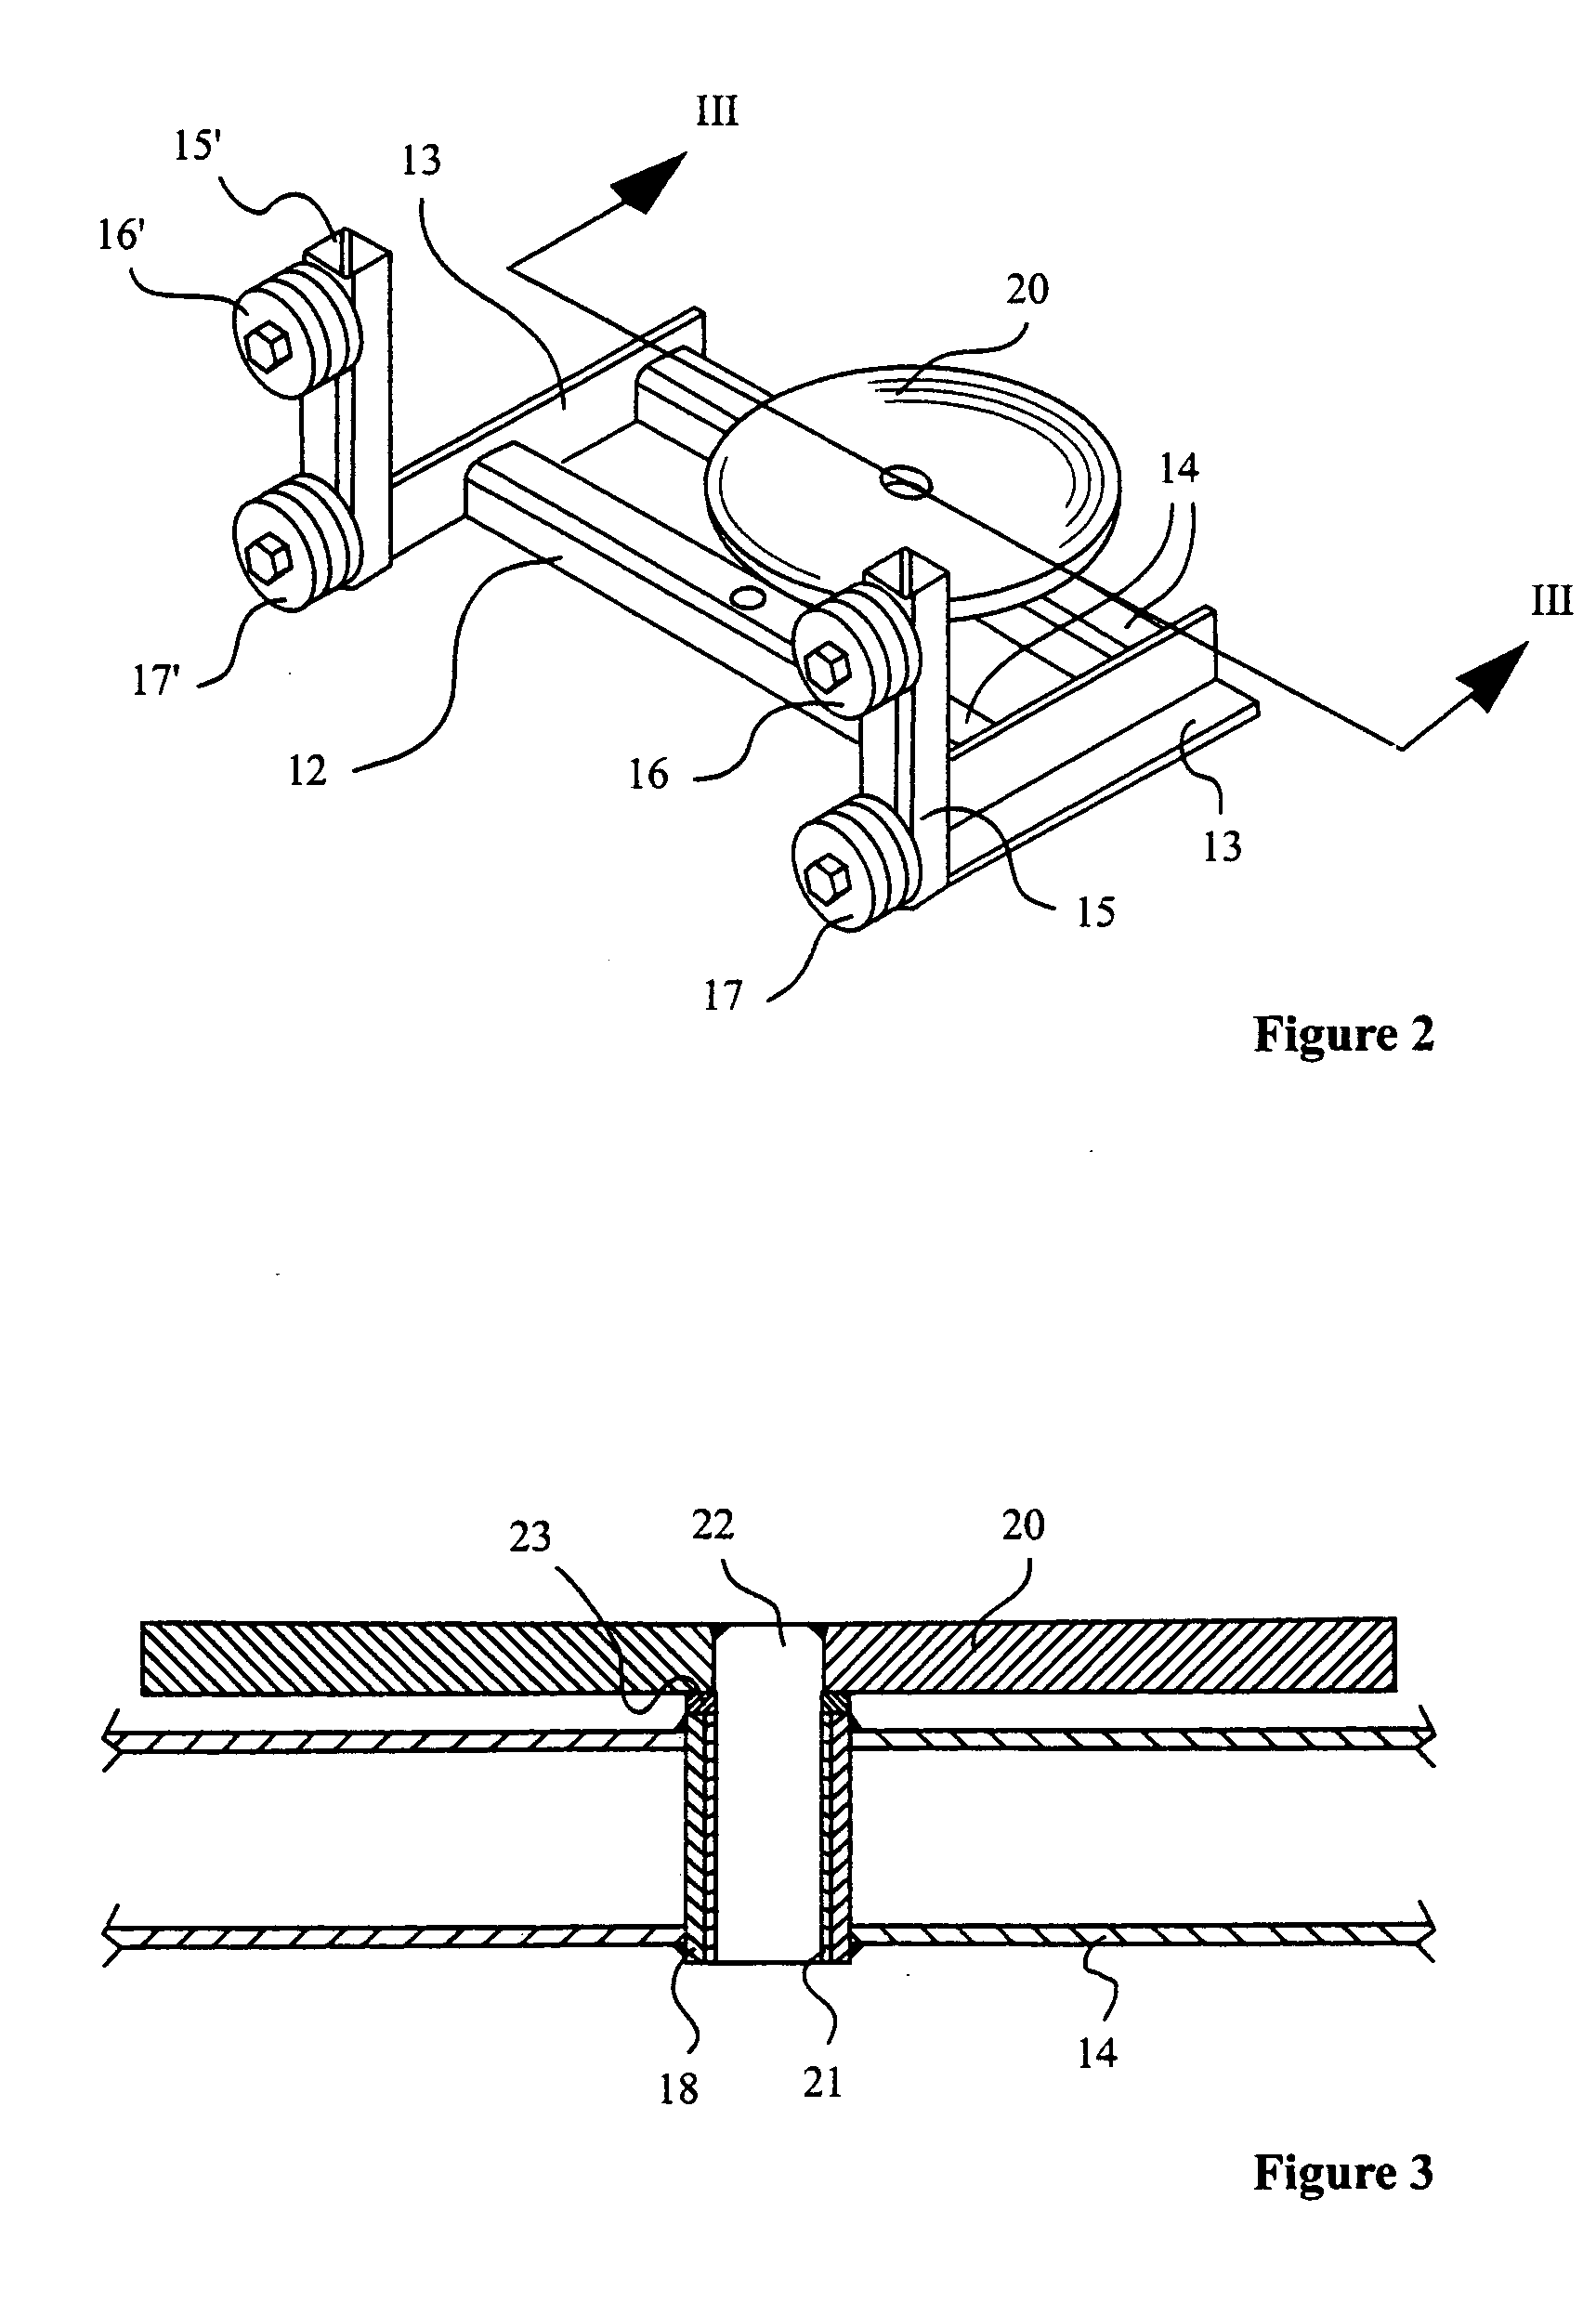 Power-assisted multidirectional jackhammer positioner